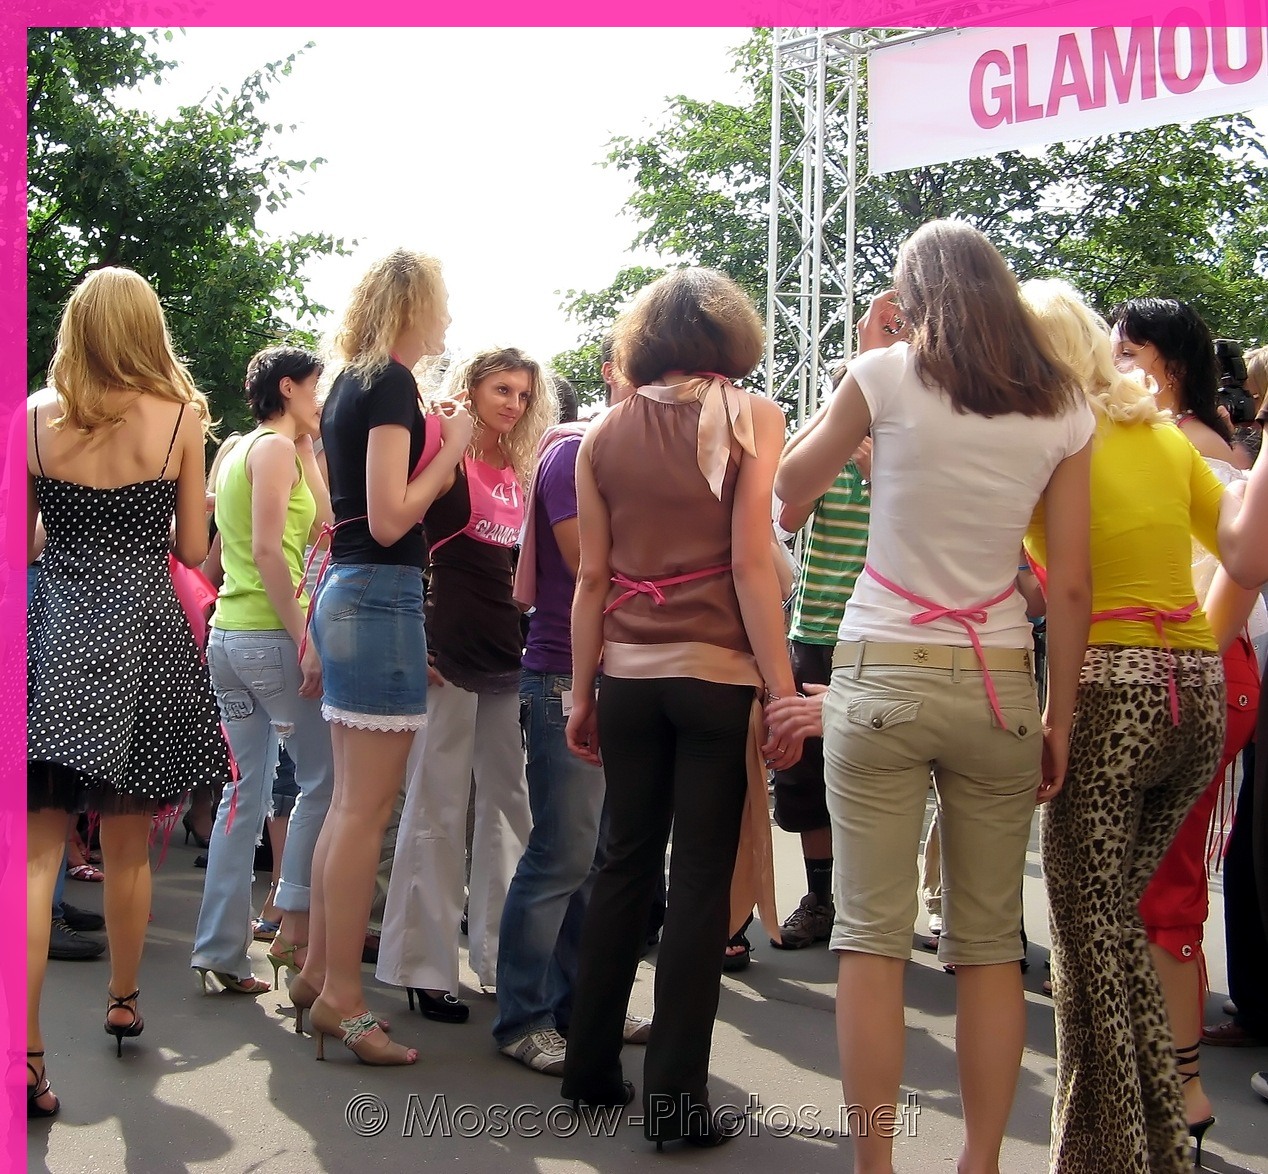 Glamour Stiletto Run - 2006